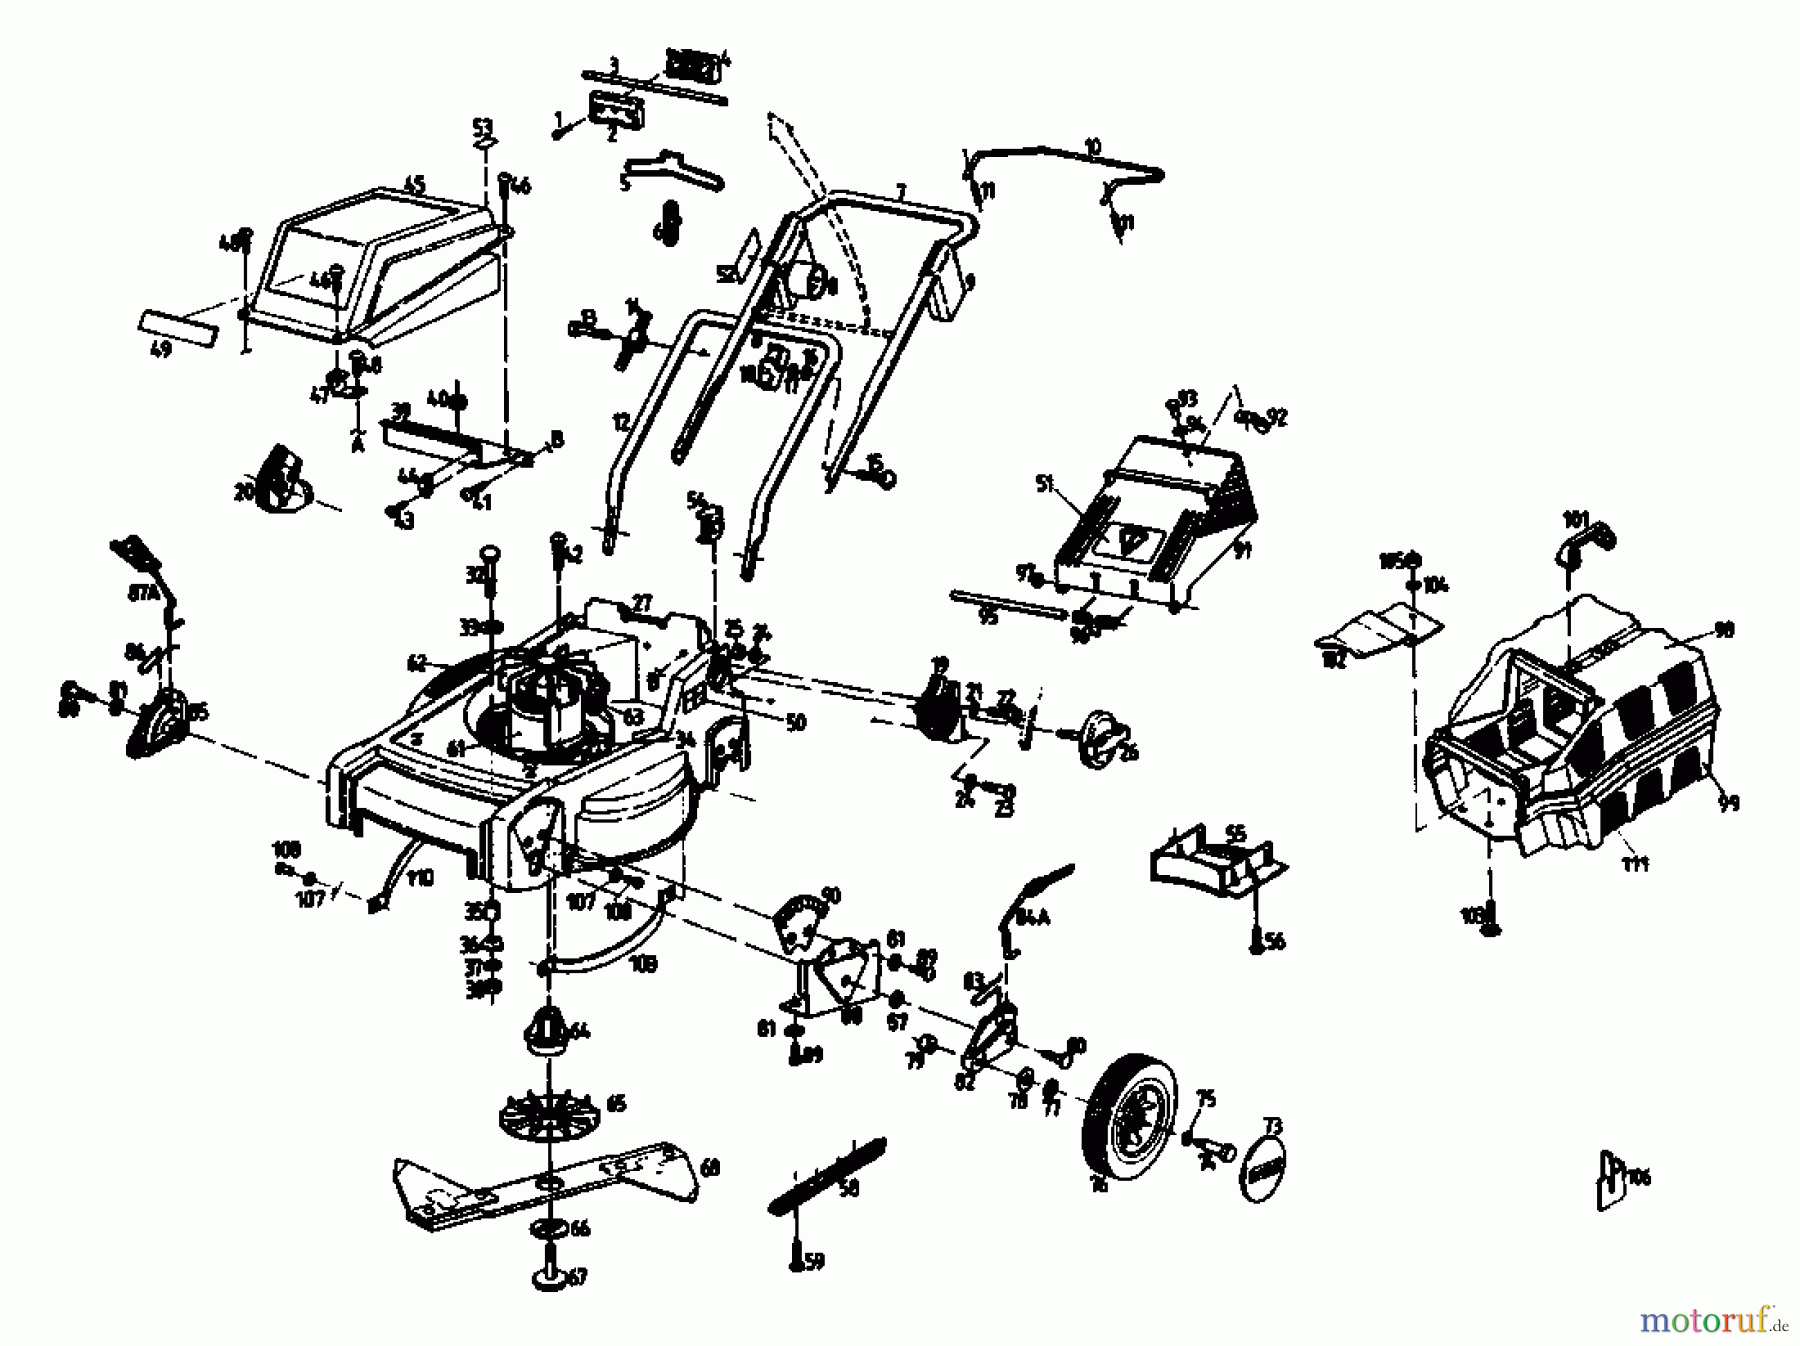  Gutbrod Electric mower HE 47 LS 02650.01  (1992) Basic machine